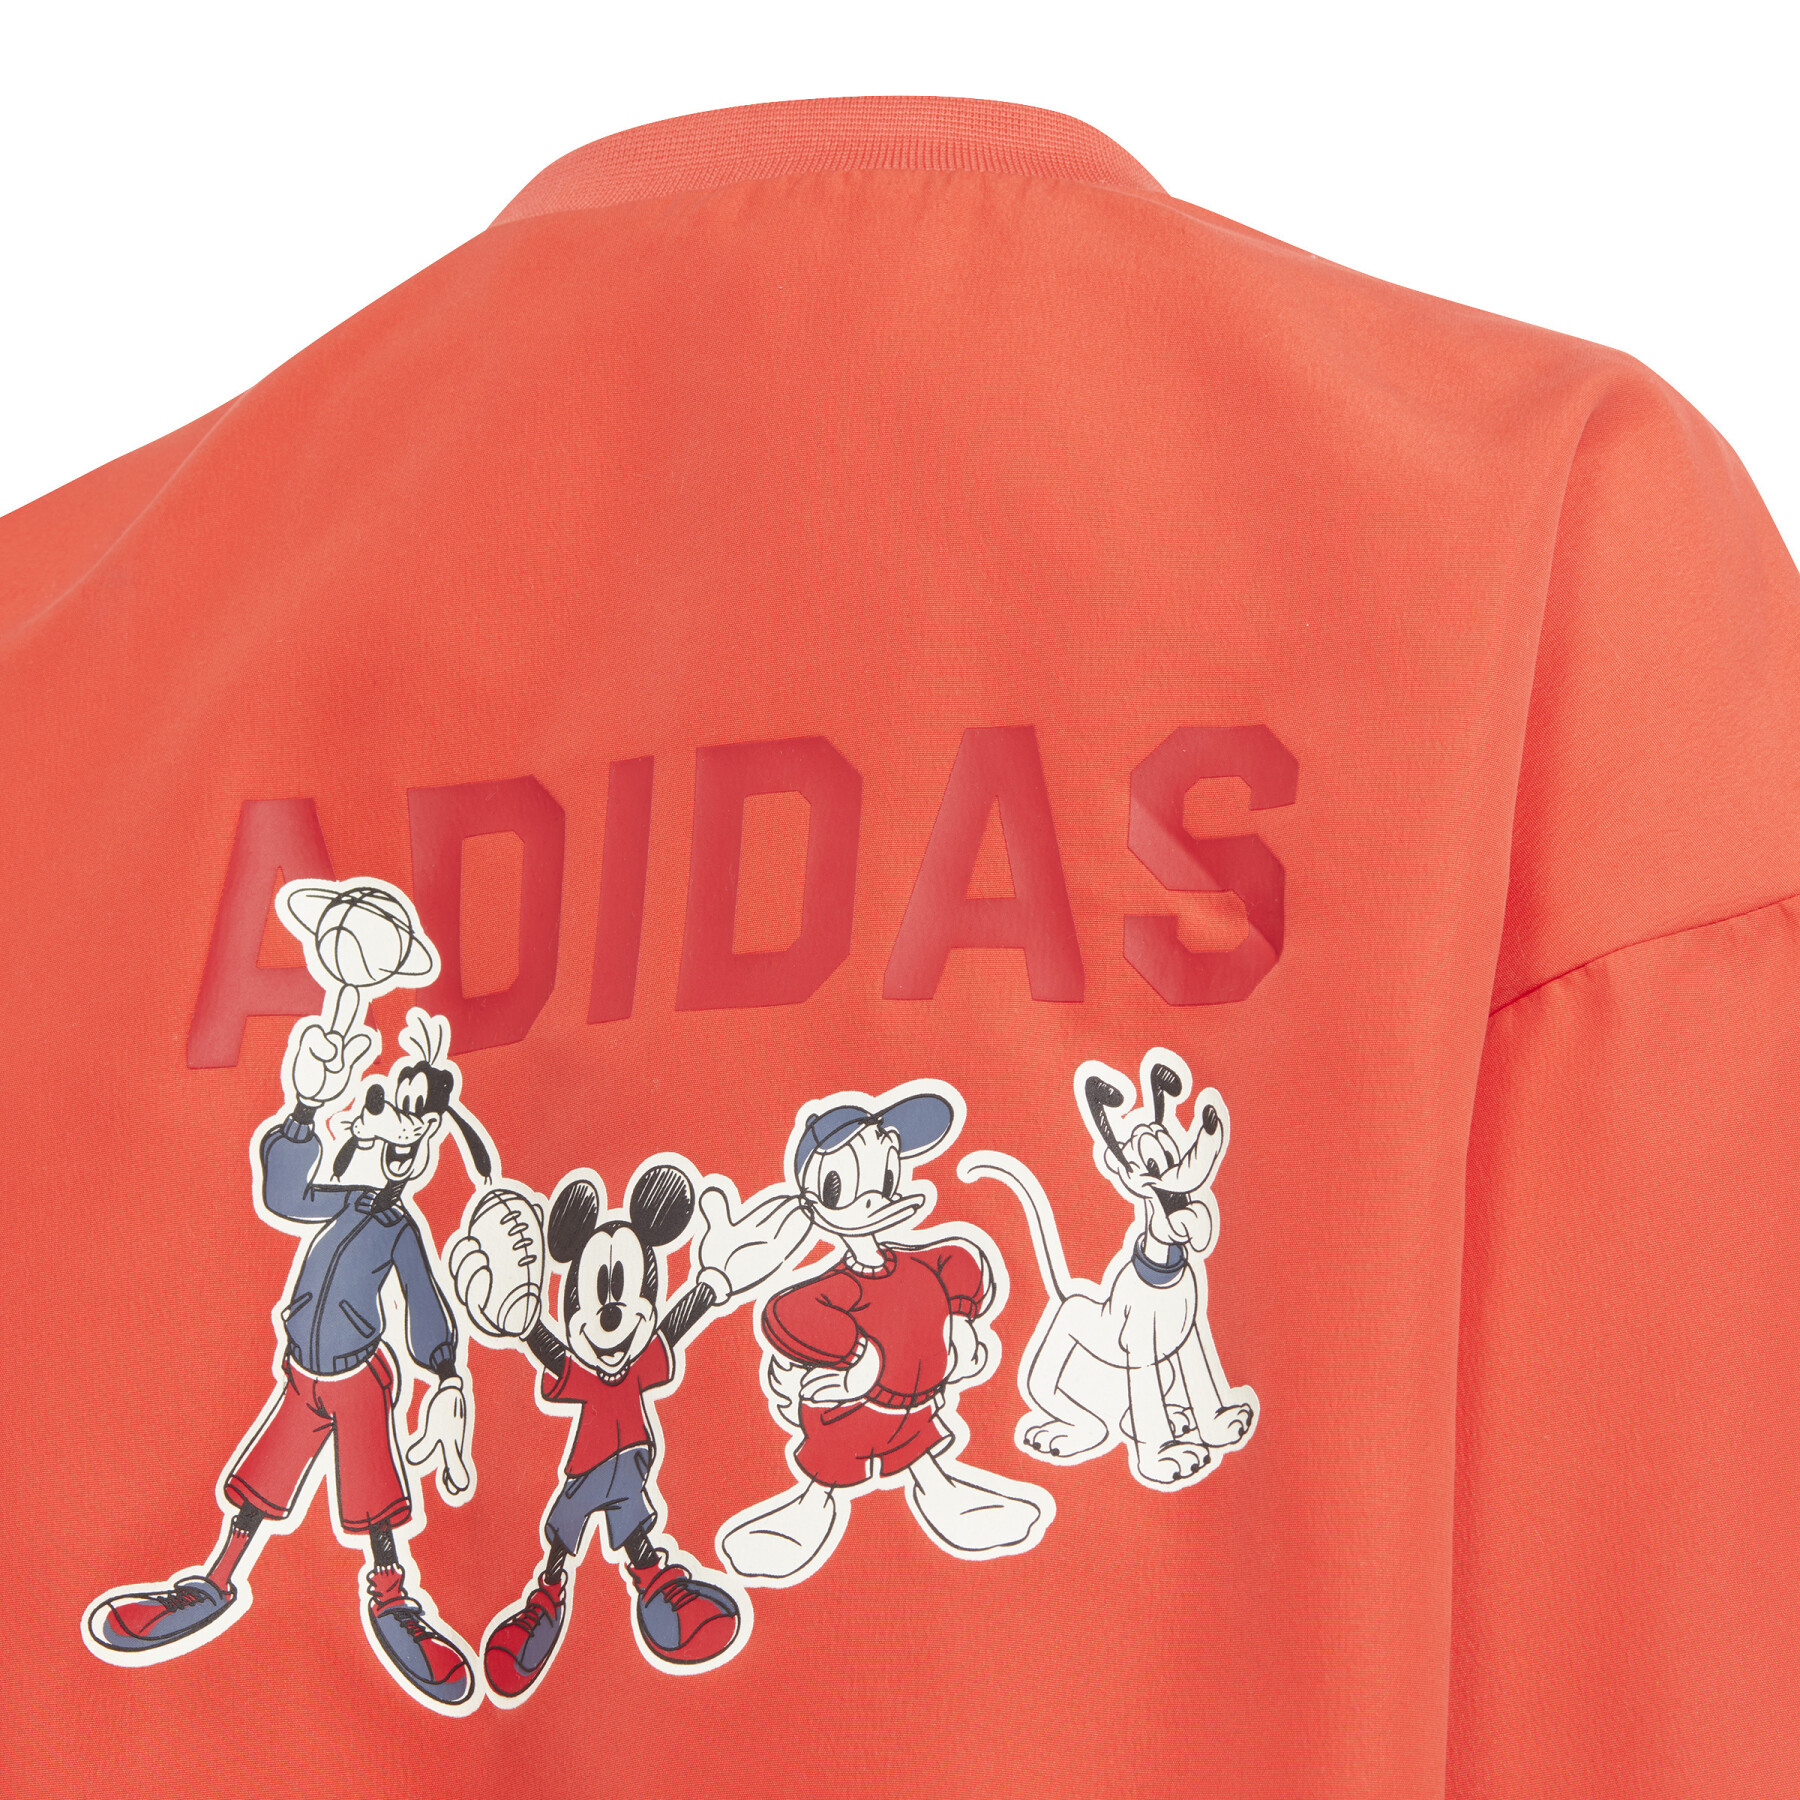 Giacca impermeabile per bambini Adidas Disney Mickey Mouse